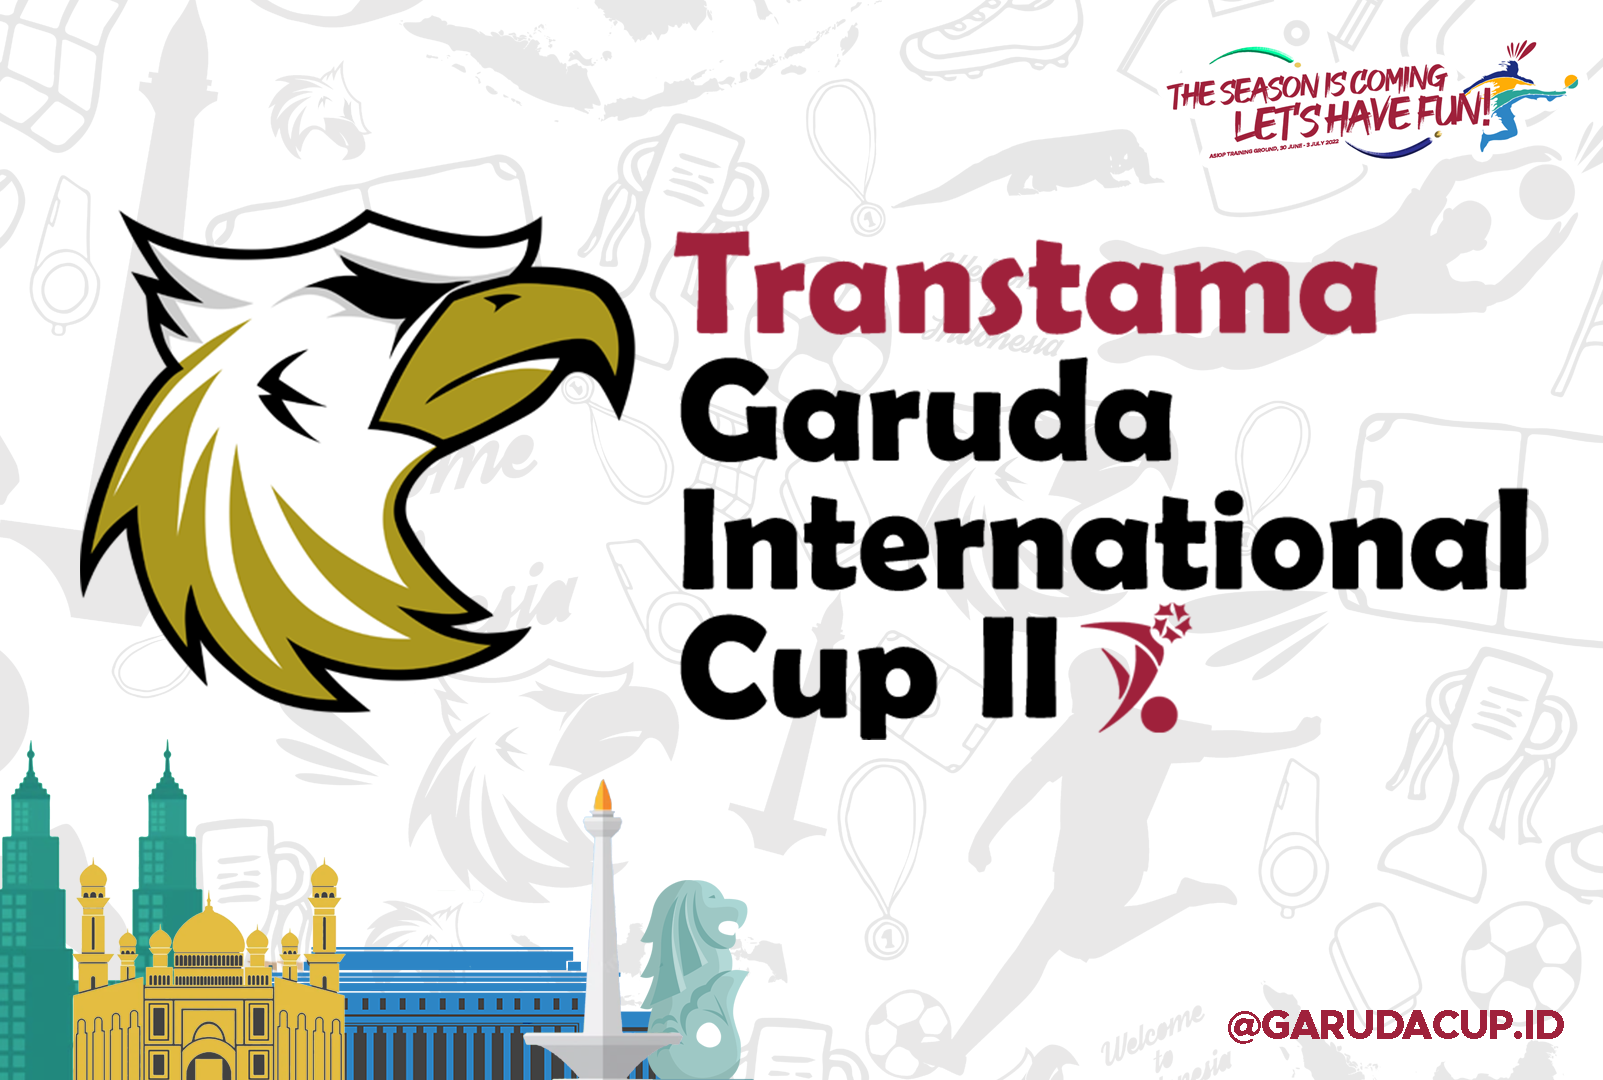 Transtama Garuda International Cup II